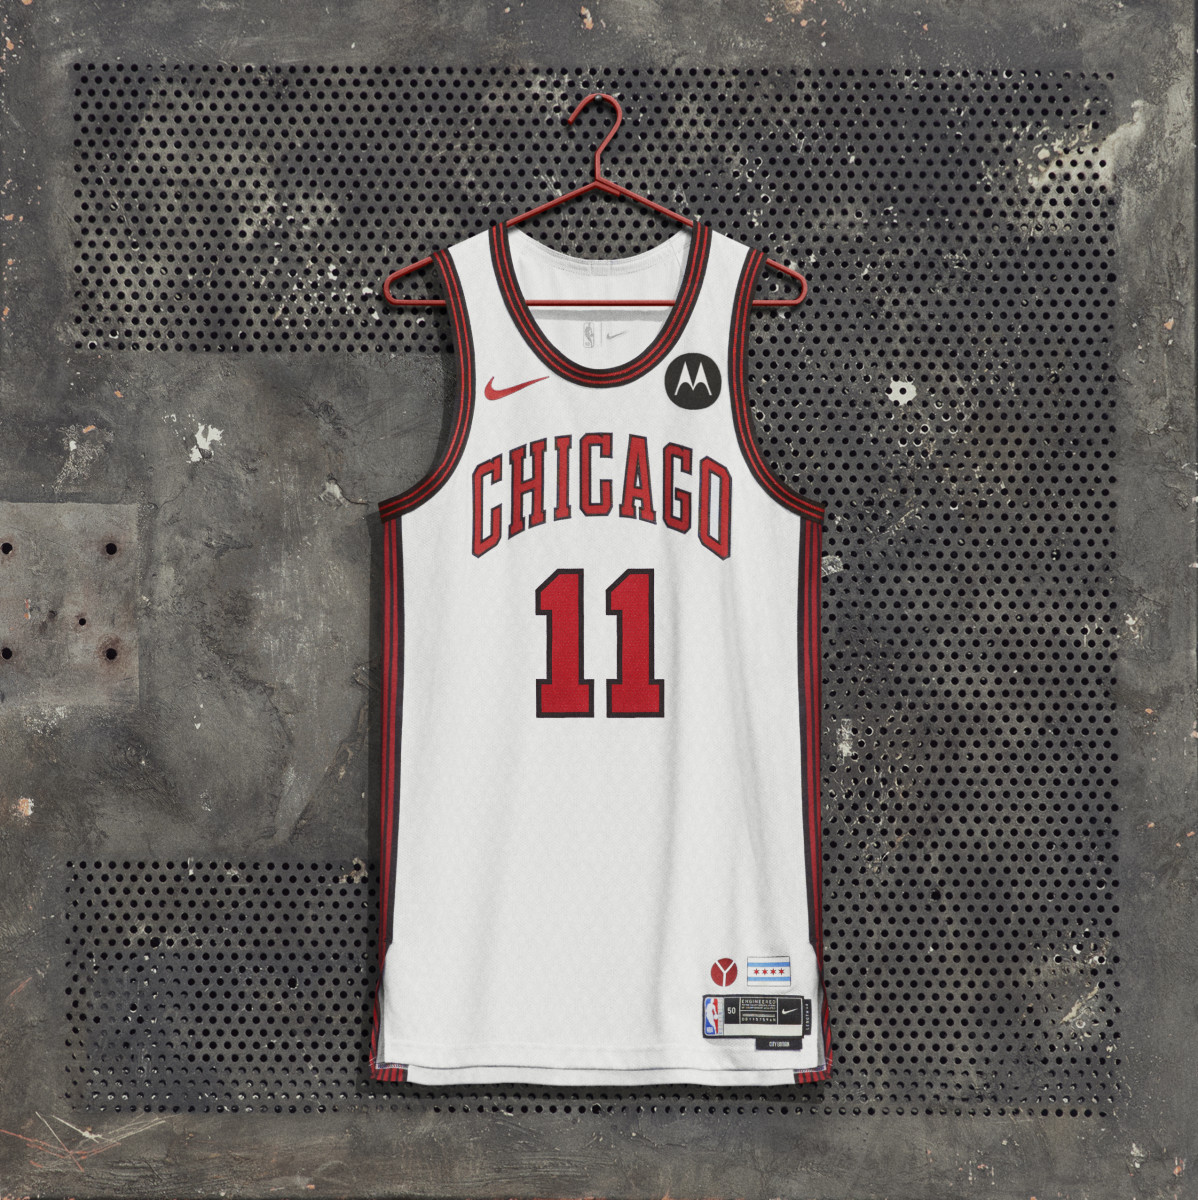 Chicago Bulls - The Chicago-inspired 2017 Bulls City Edition